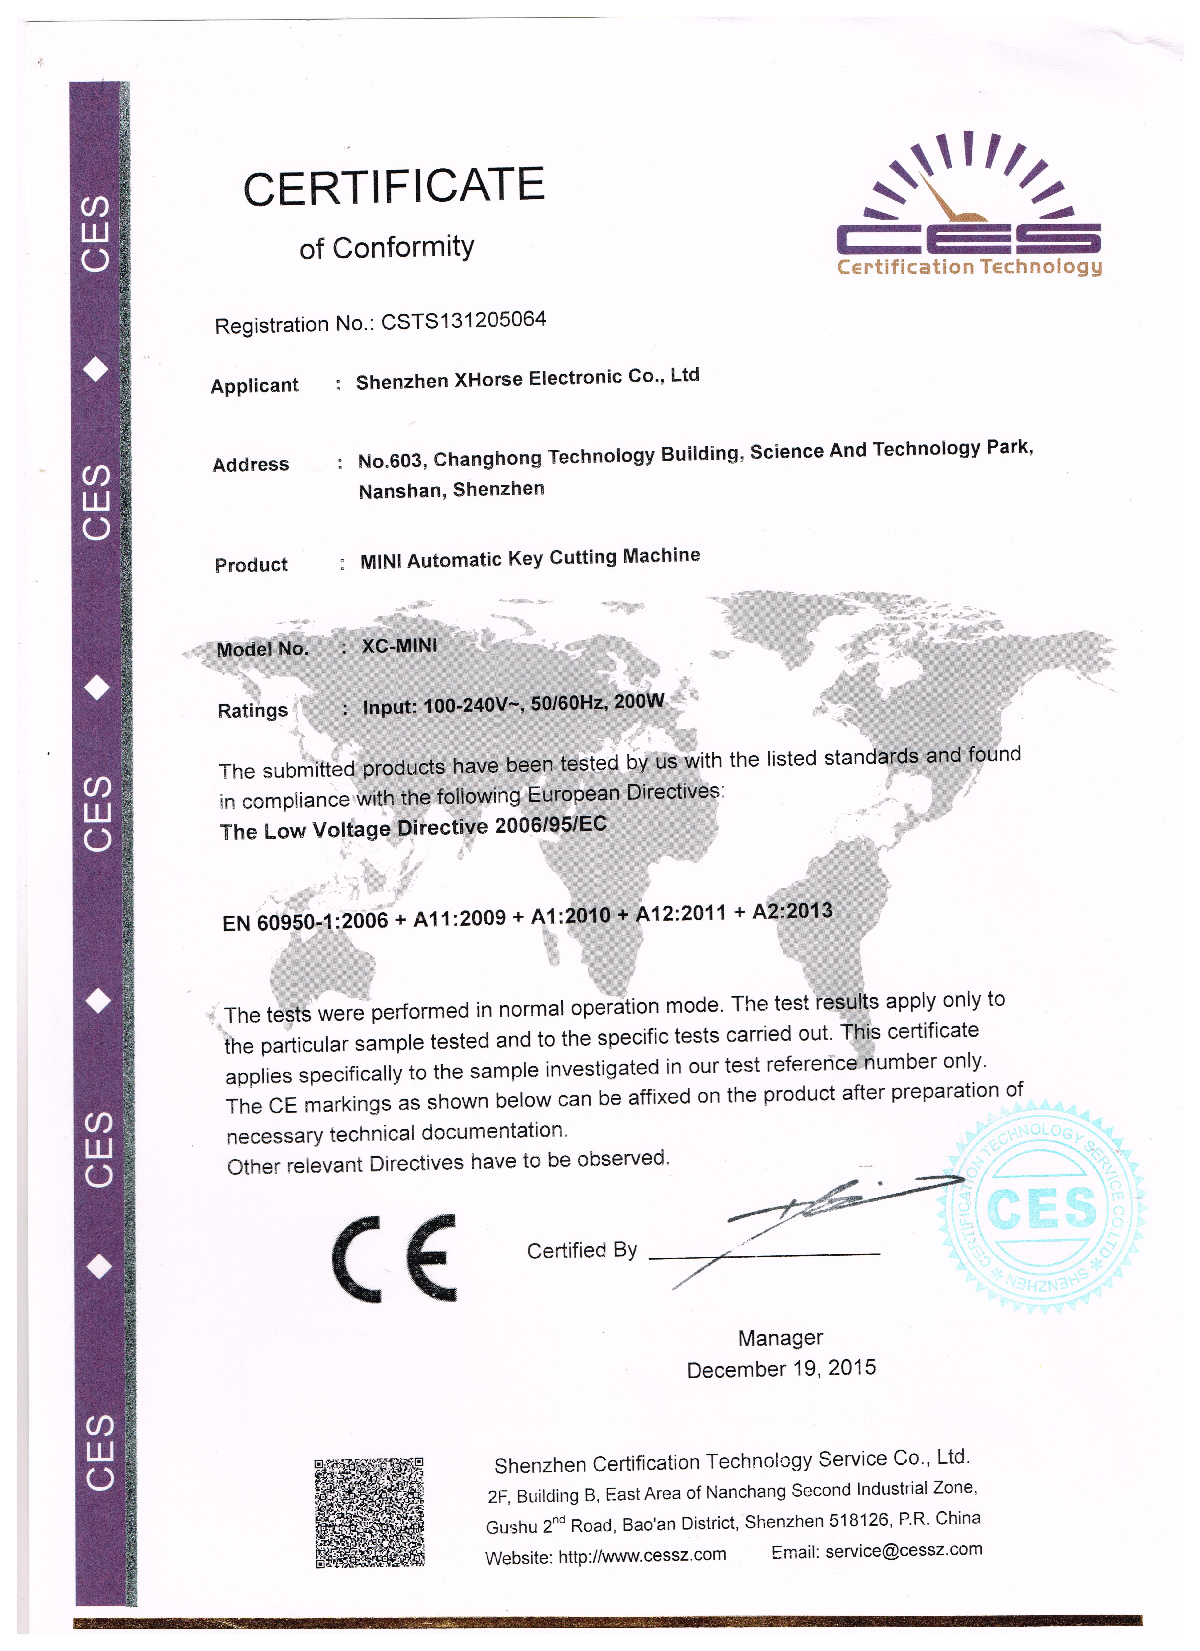 iKeycutter CONDOR XC-MINI Certificate